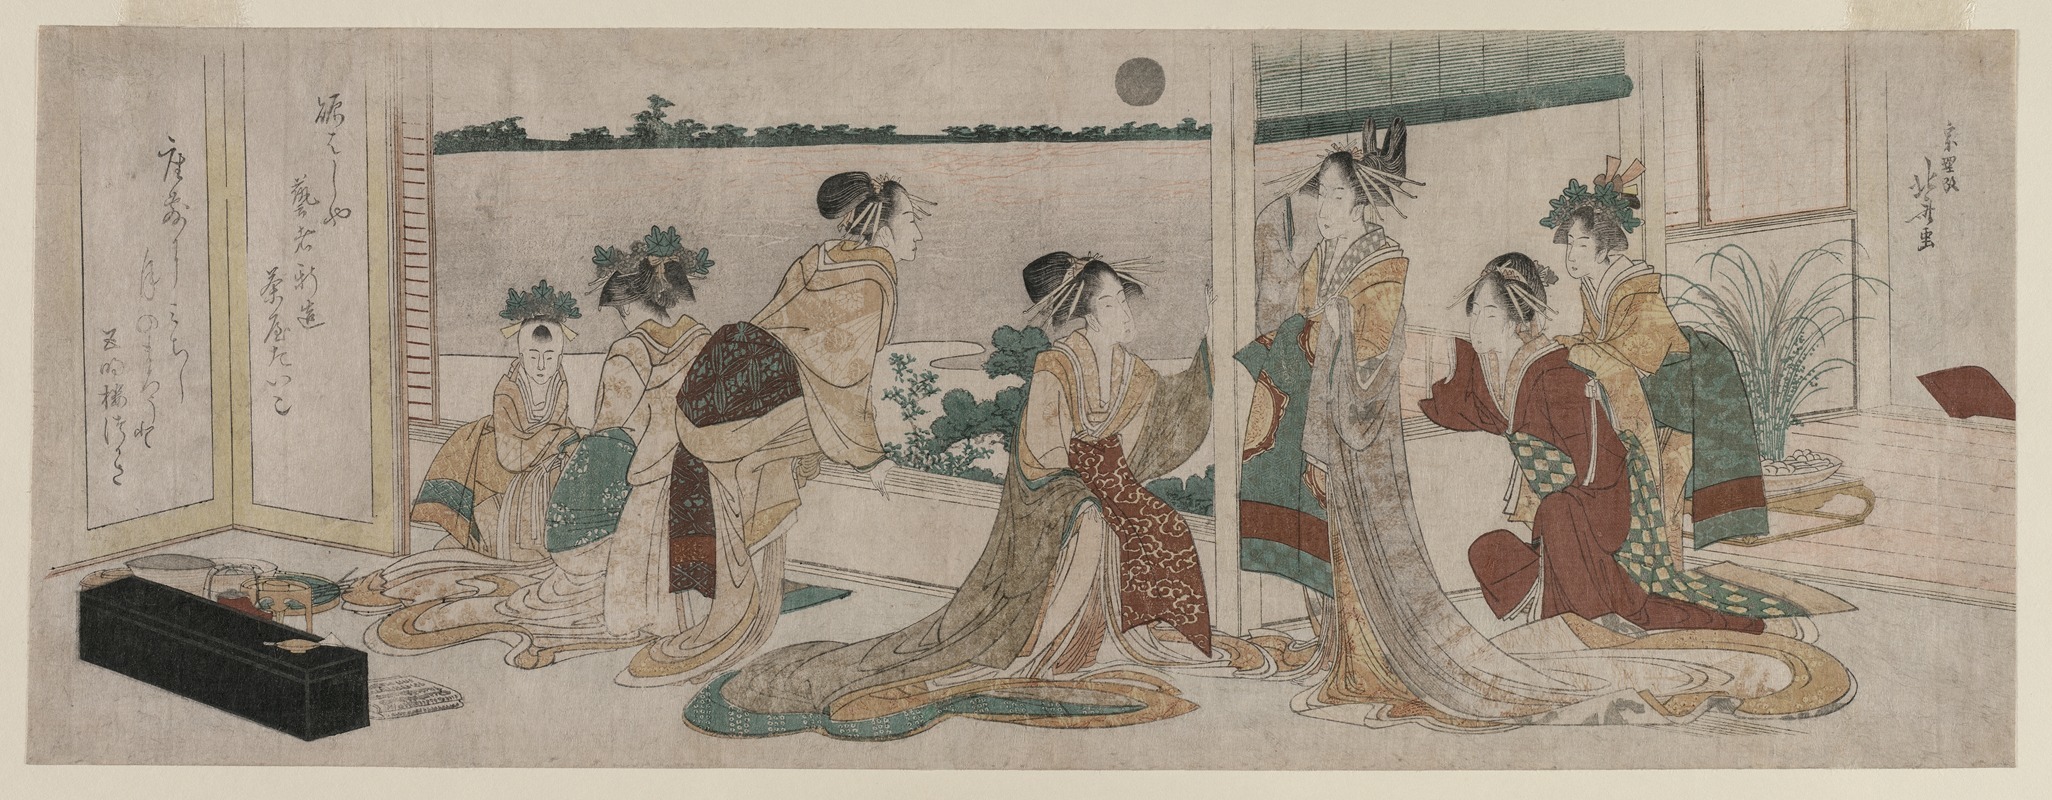 Katsushika Hokusai - Tsukasa and Other Courtesans of the Ogiya Watching the Autumn Moon Rise Over Rice Fields from a Balcony in the Yoshiwara